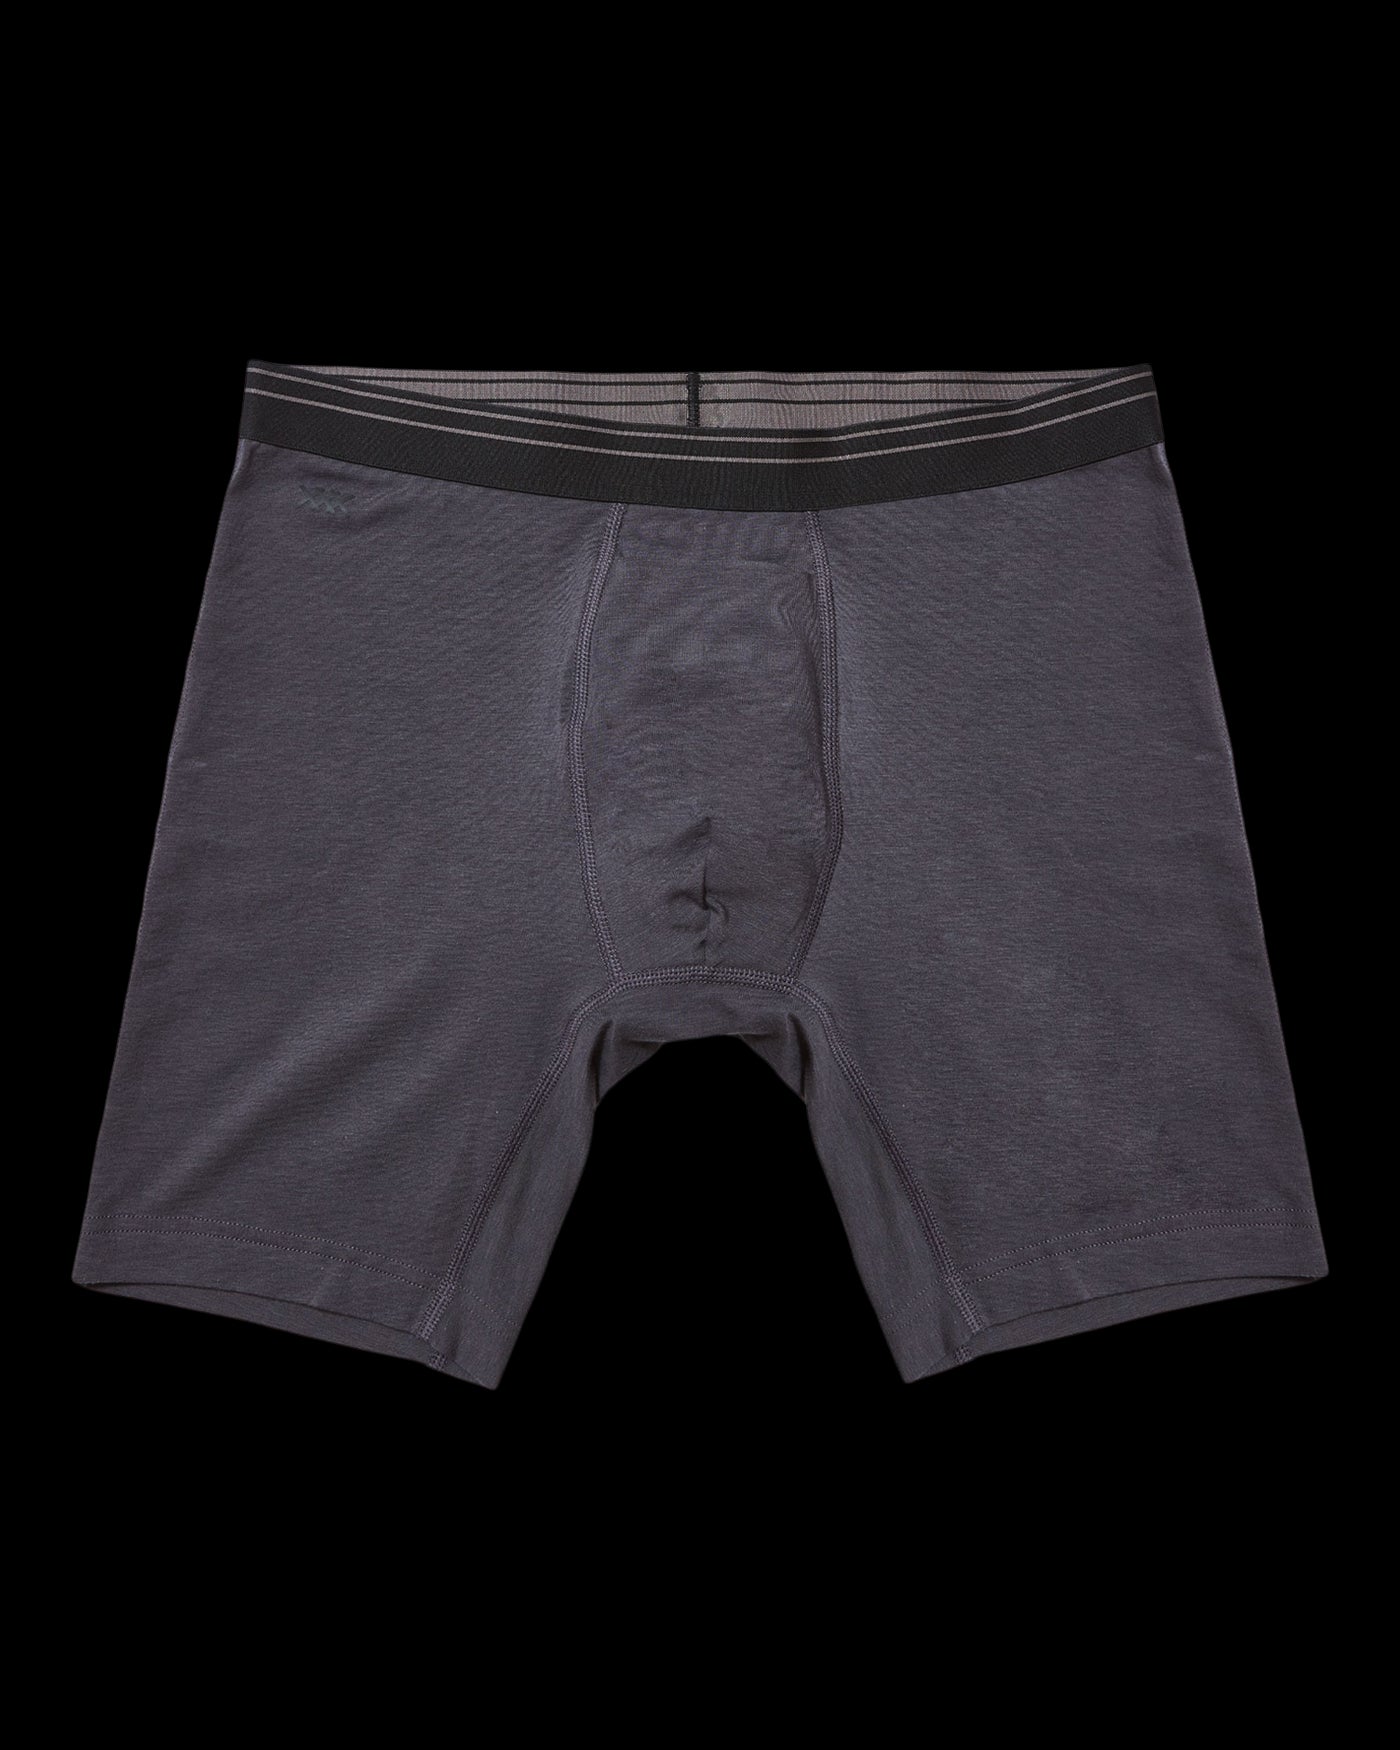 Men's Boxer Shorts White - Men's Underwear